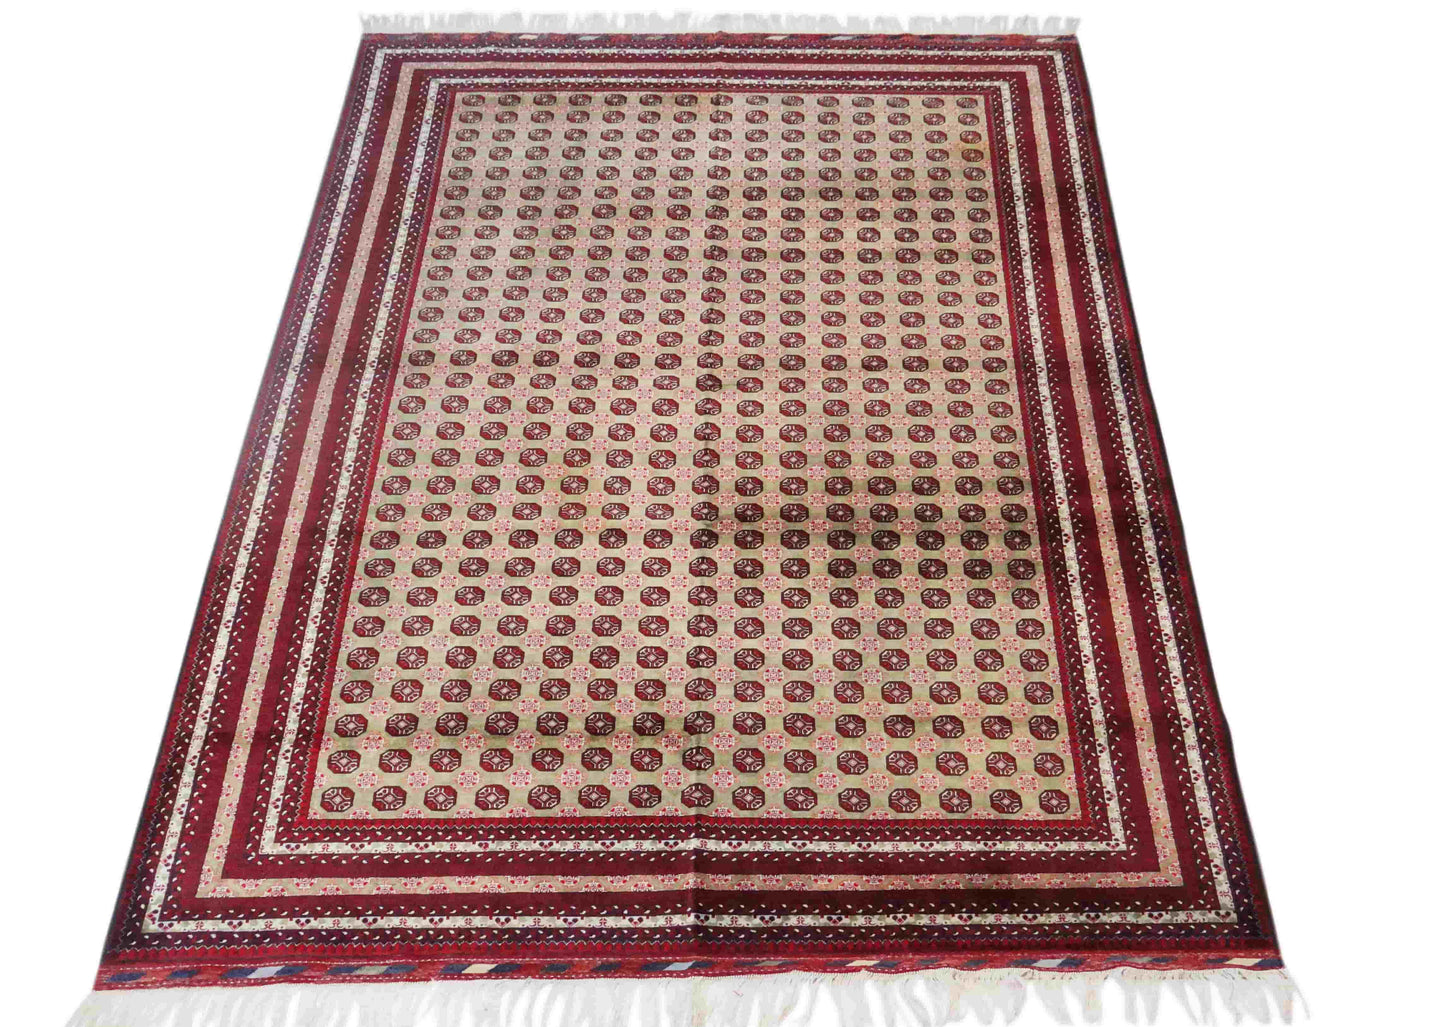 Oriental, Vintage Rug (Kowaja Roshnai -Mazar Design)